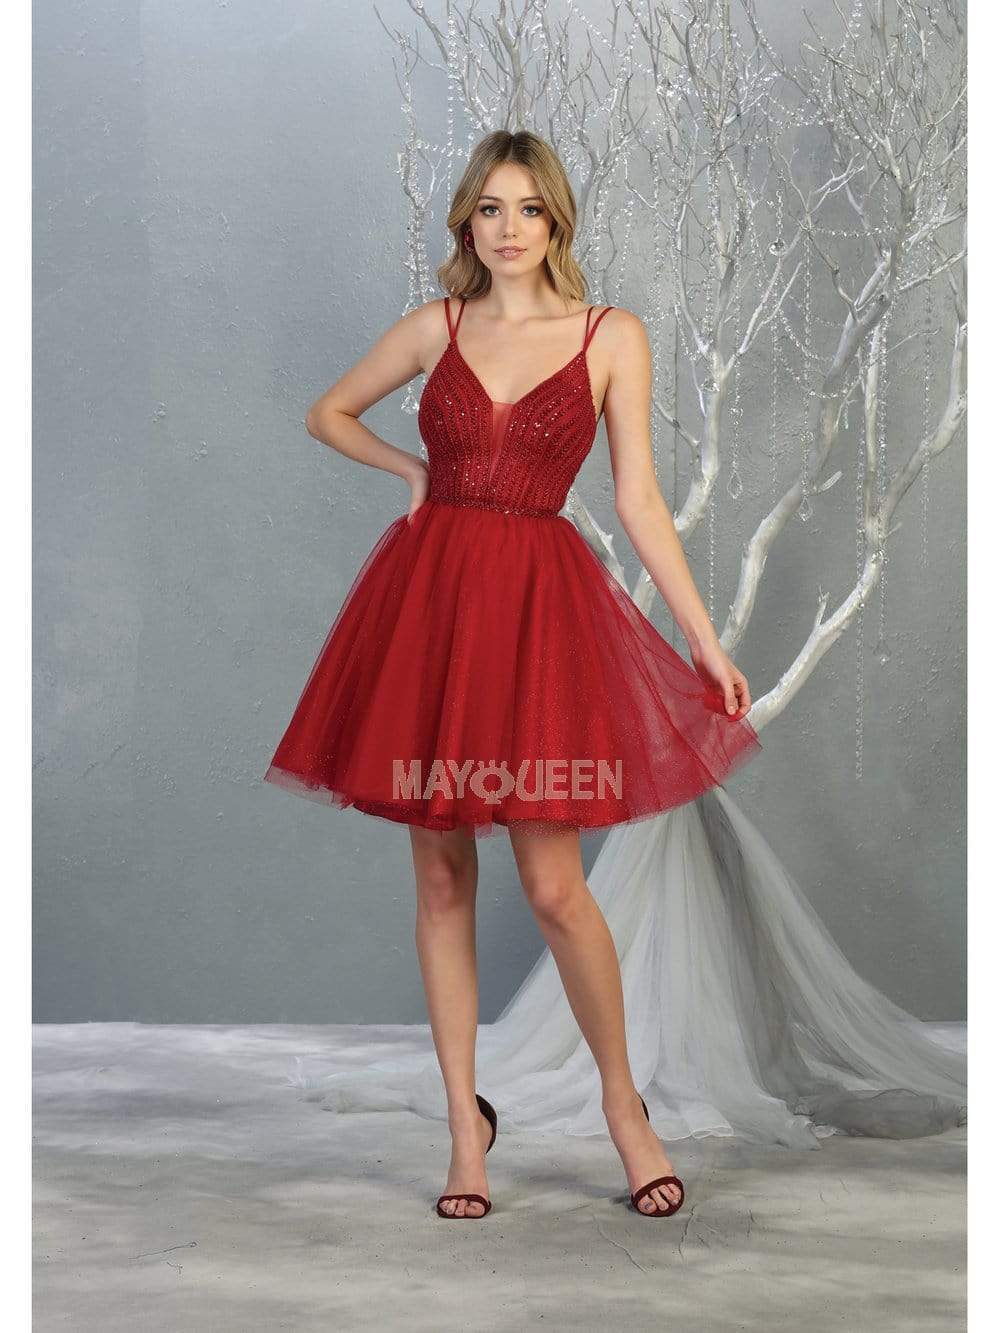 May Queen - MQ1800 Embellished Deep V-neck A-line Dress Homecoming Dresses 4 / Burgundy